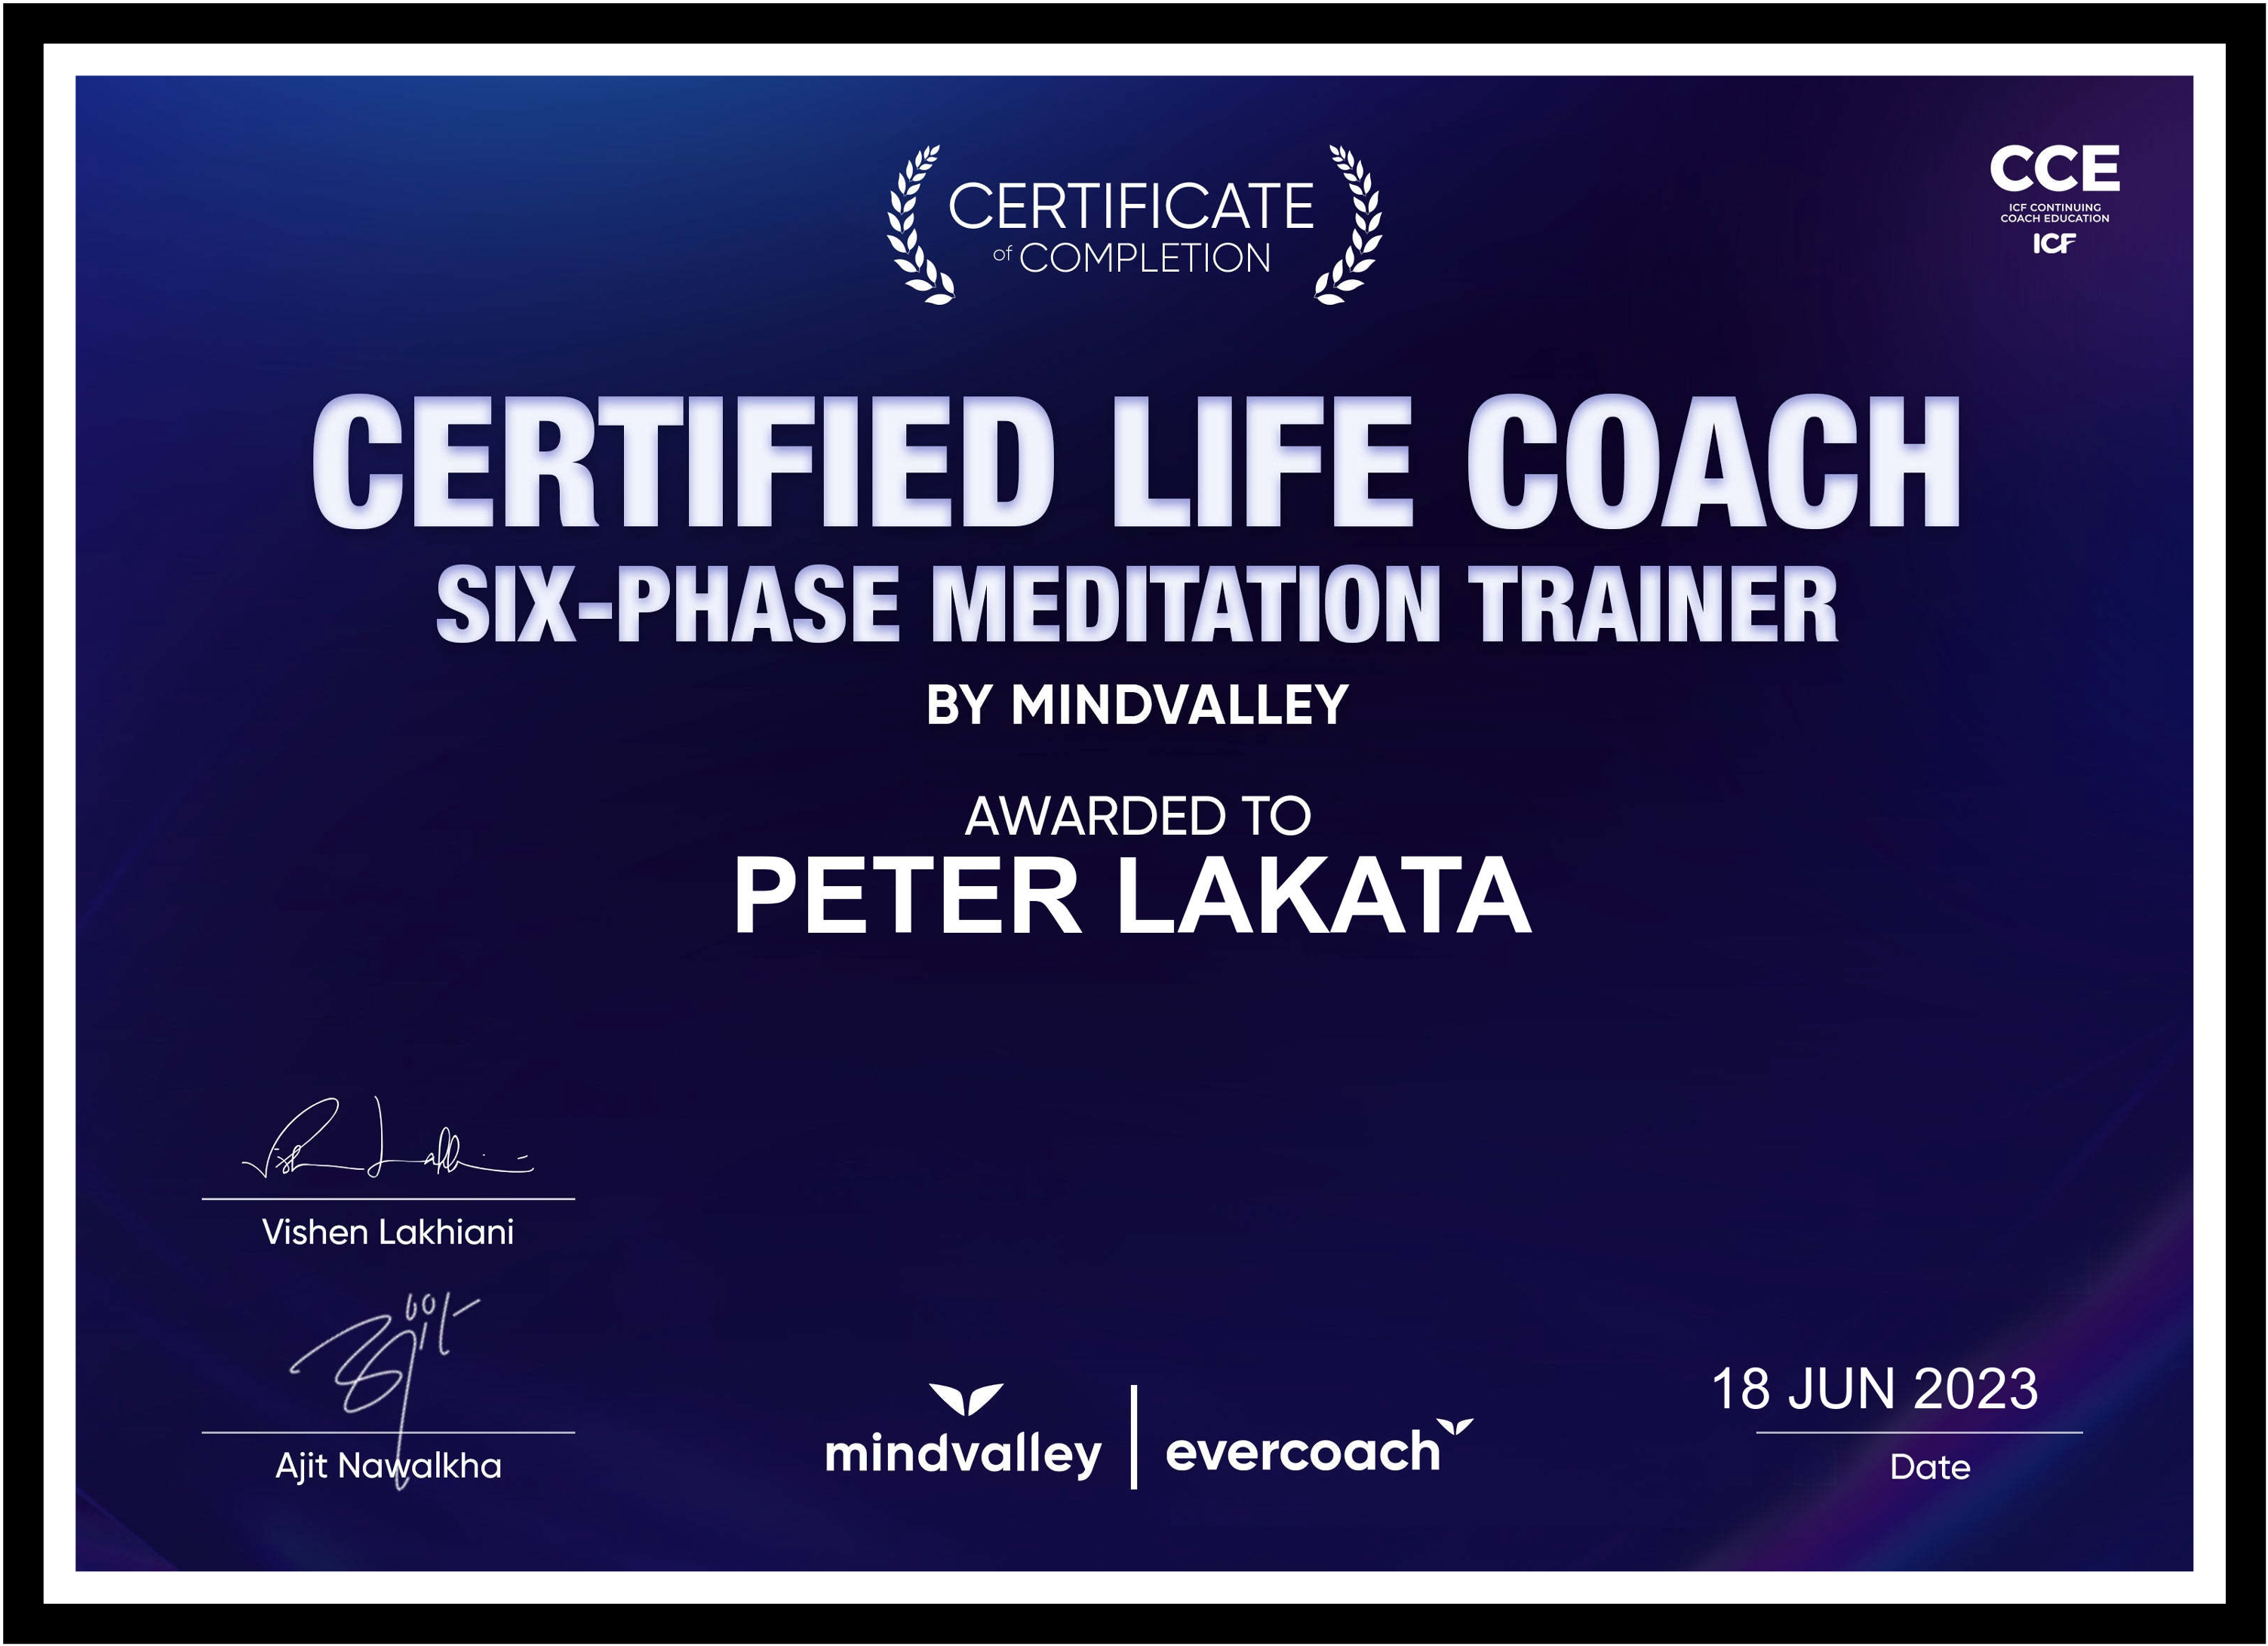 Life coaching certificate for Peter Lkaata